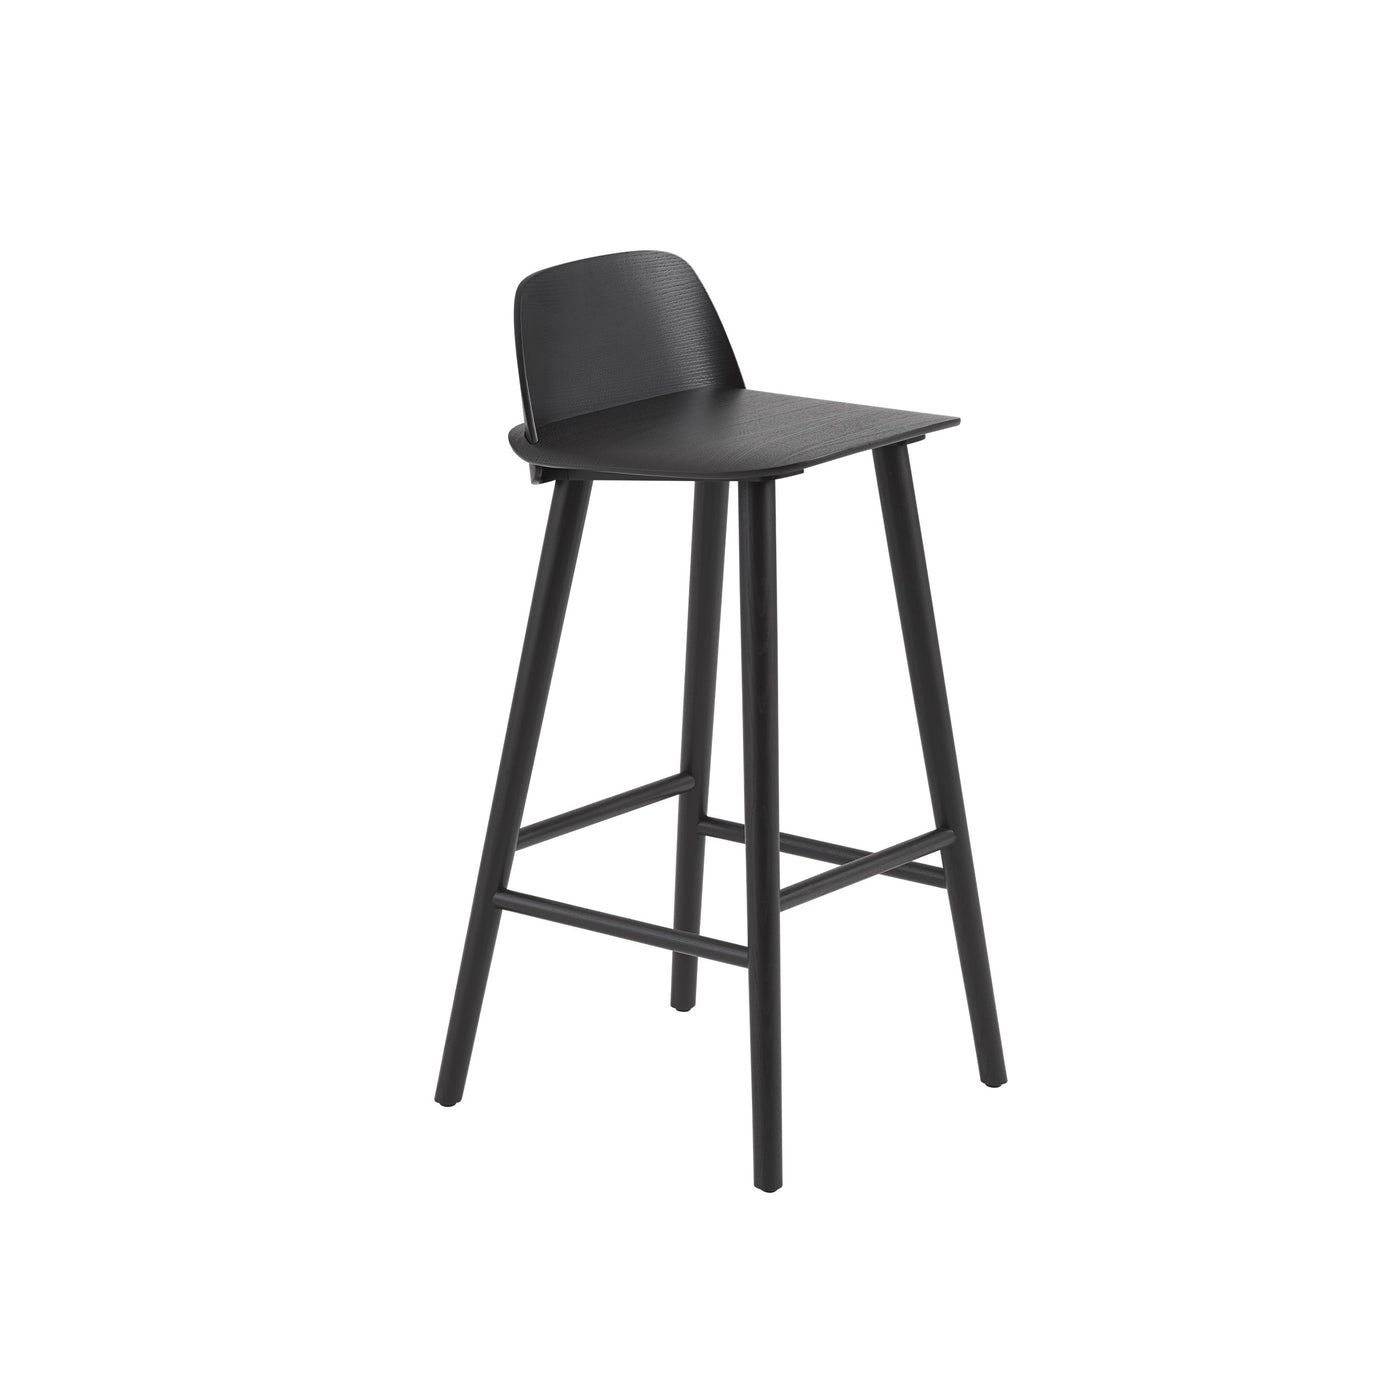 Muuto Nerd Bar stool. Shop online at someday designs. #colour_black